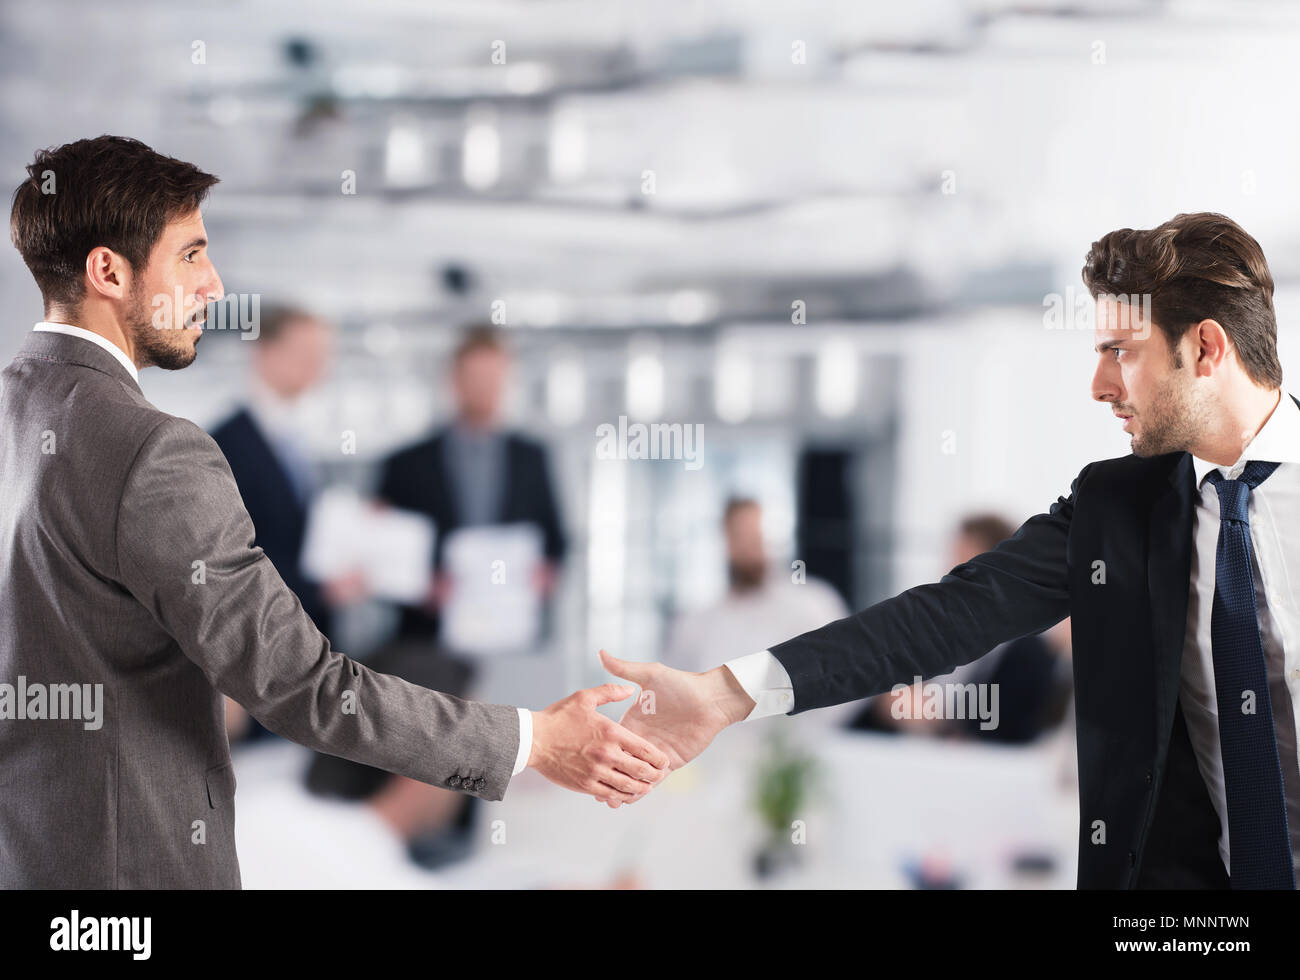 Business handshake. Concept of teamwork and partnership Stock Photo